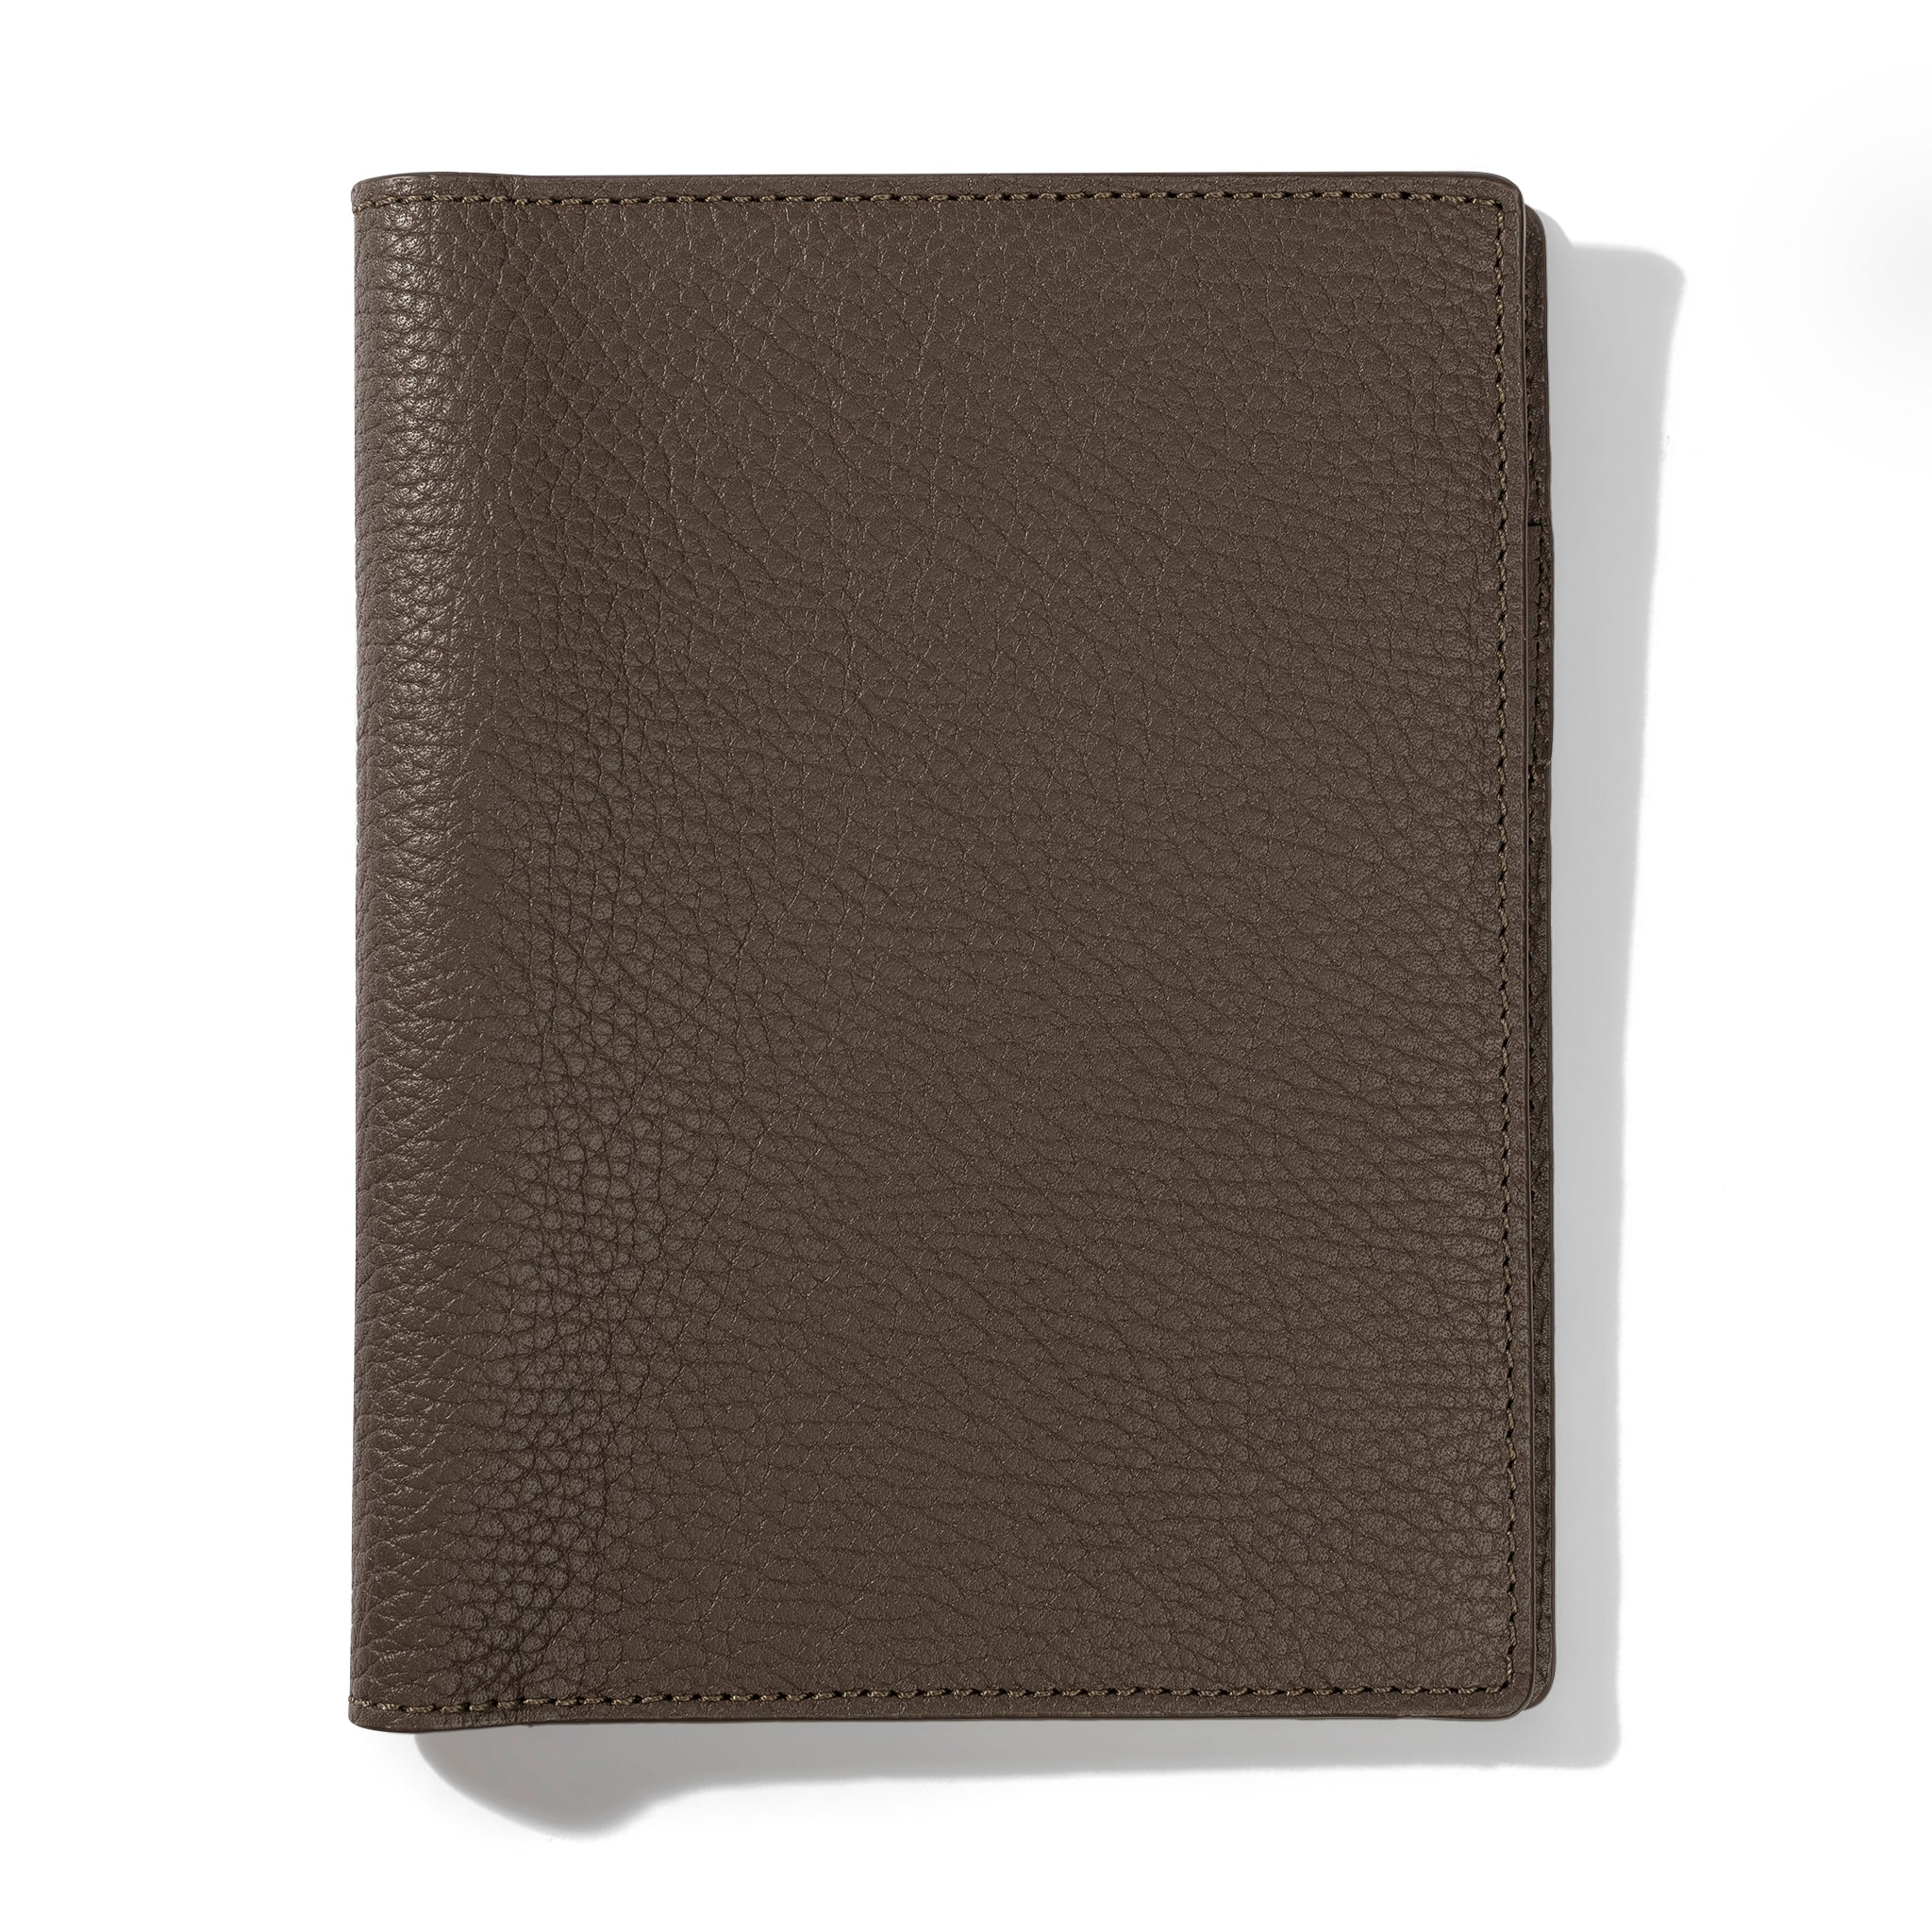 Mountain sky night leather handmade passport cover holder wallet